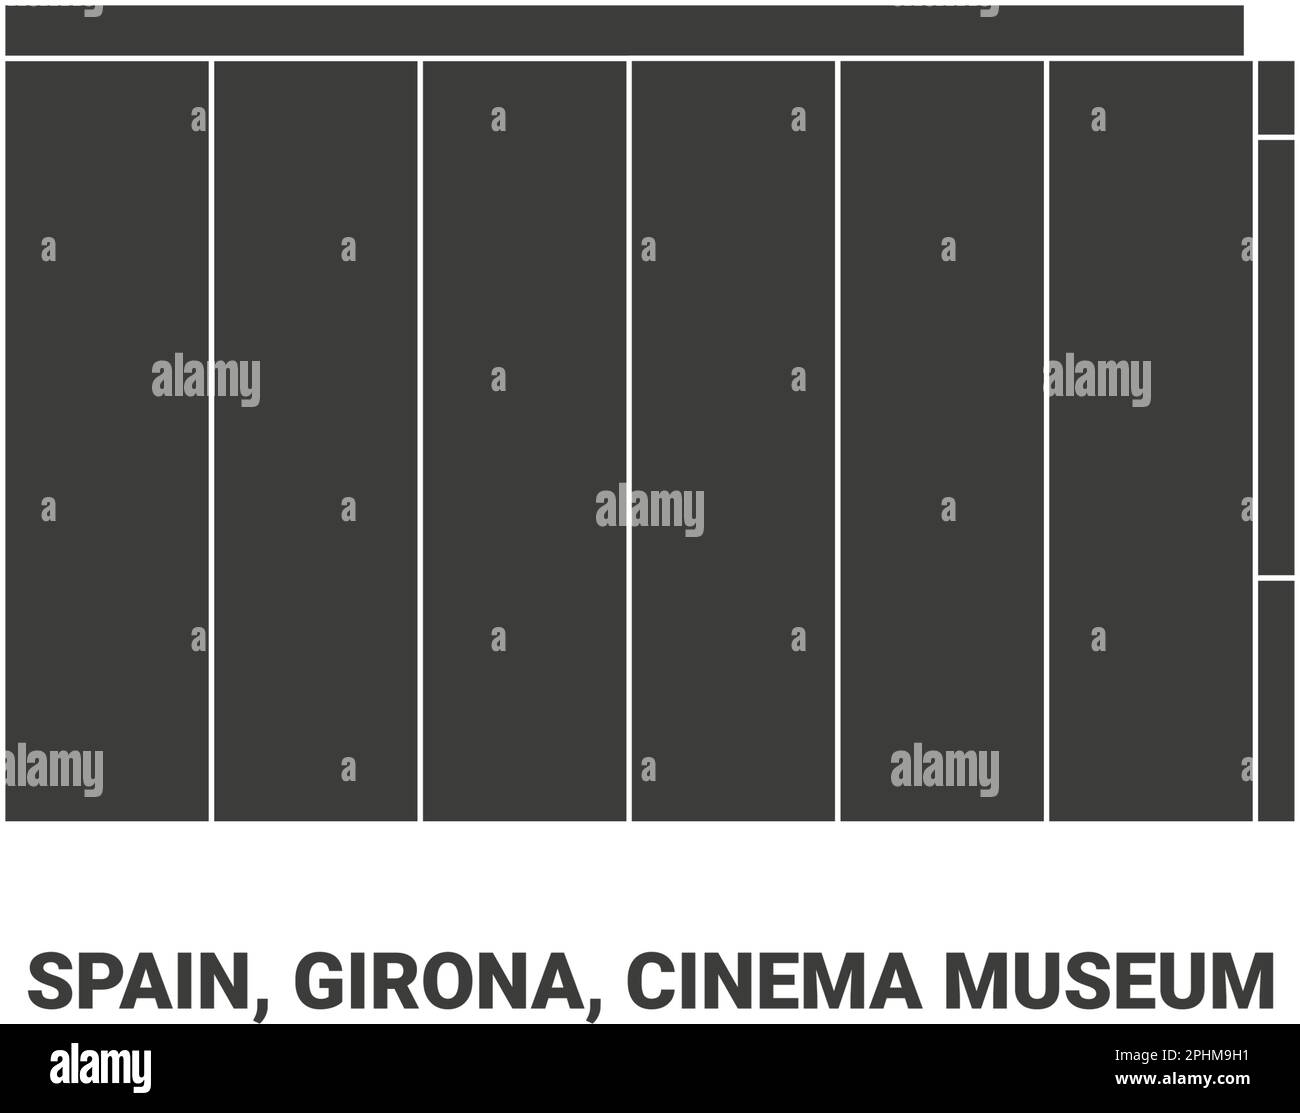 Spain, Girona, Cinema Museum, travel landmark vector illustration Stock Vector